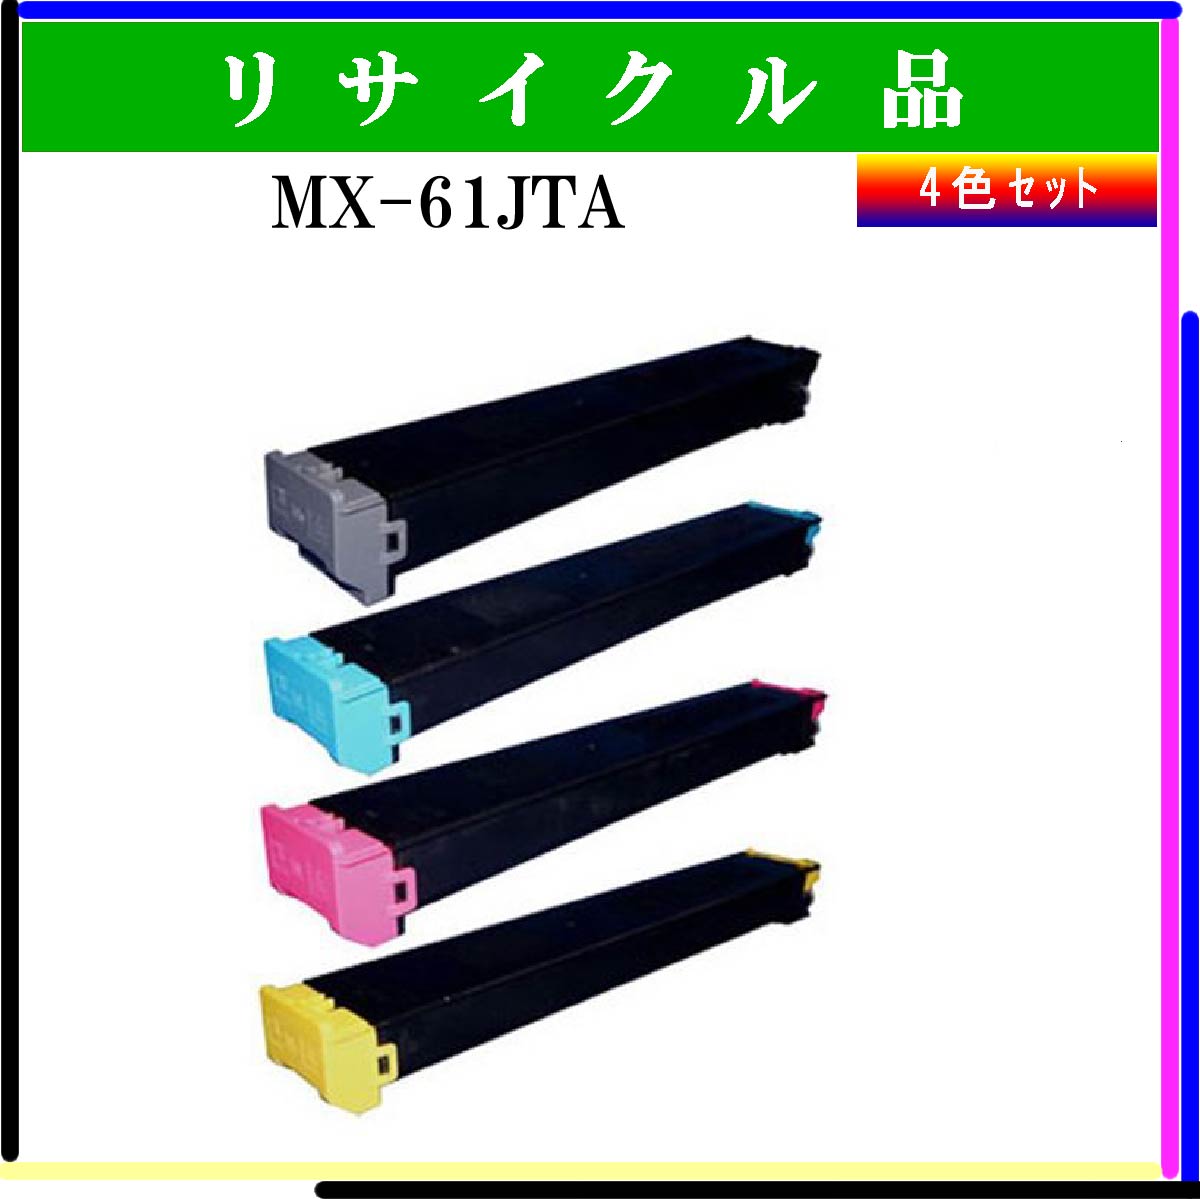 MX-61JTA (4色ｾｯﾄ) - ウインドウを閉じる